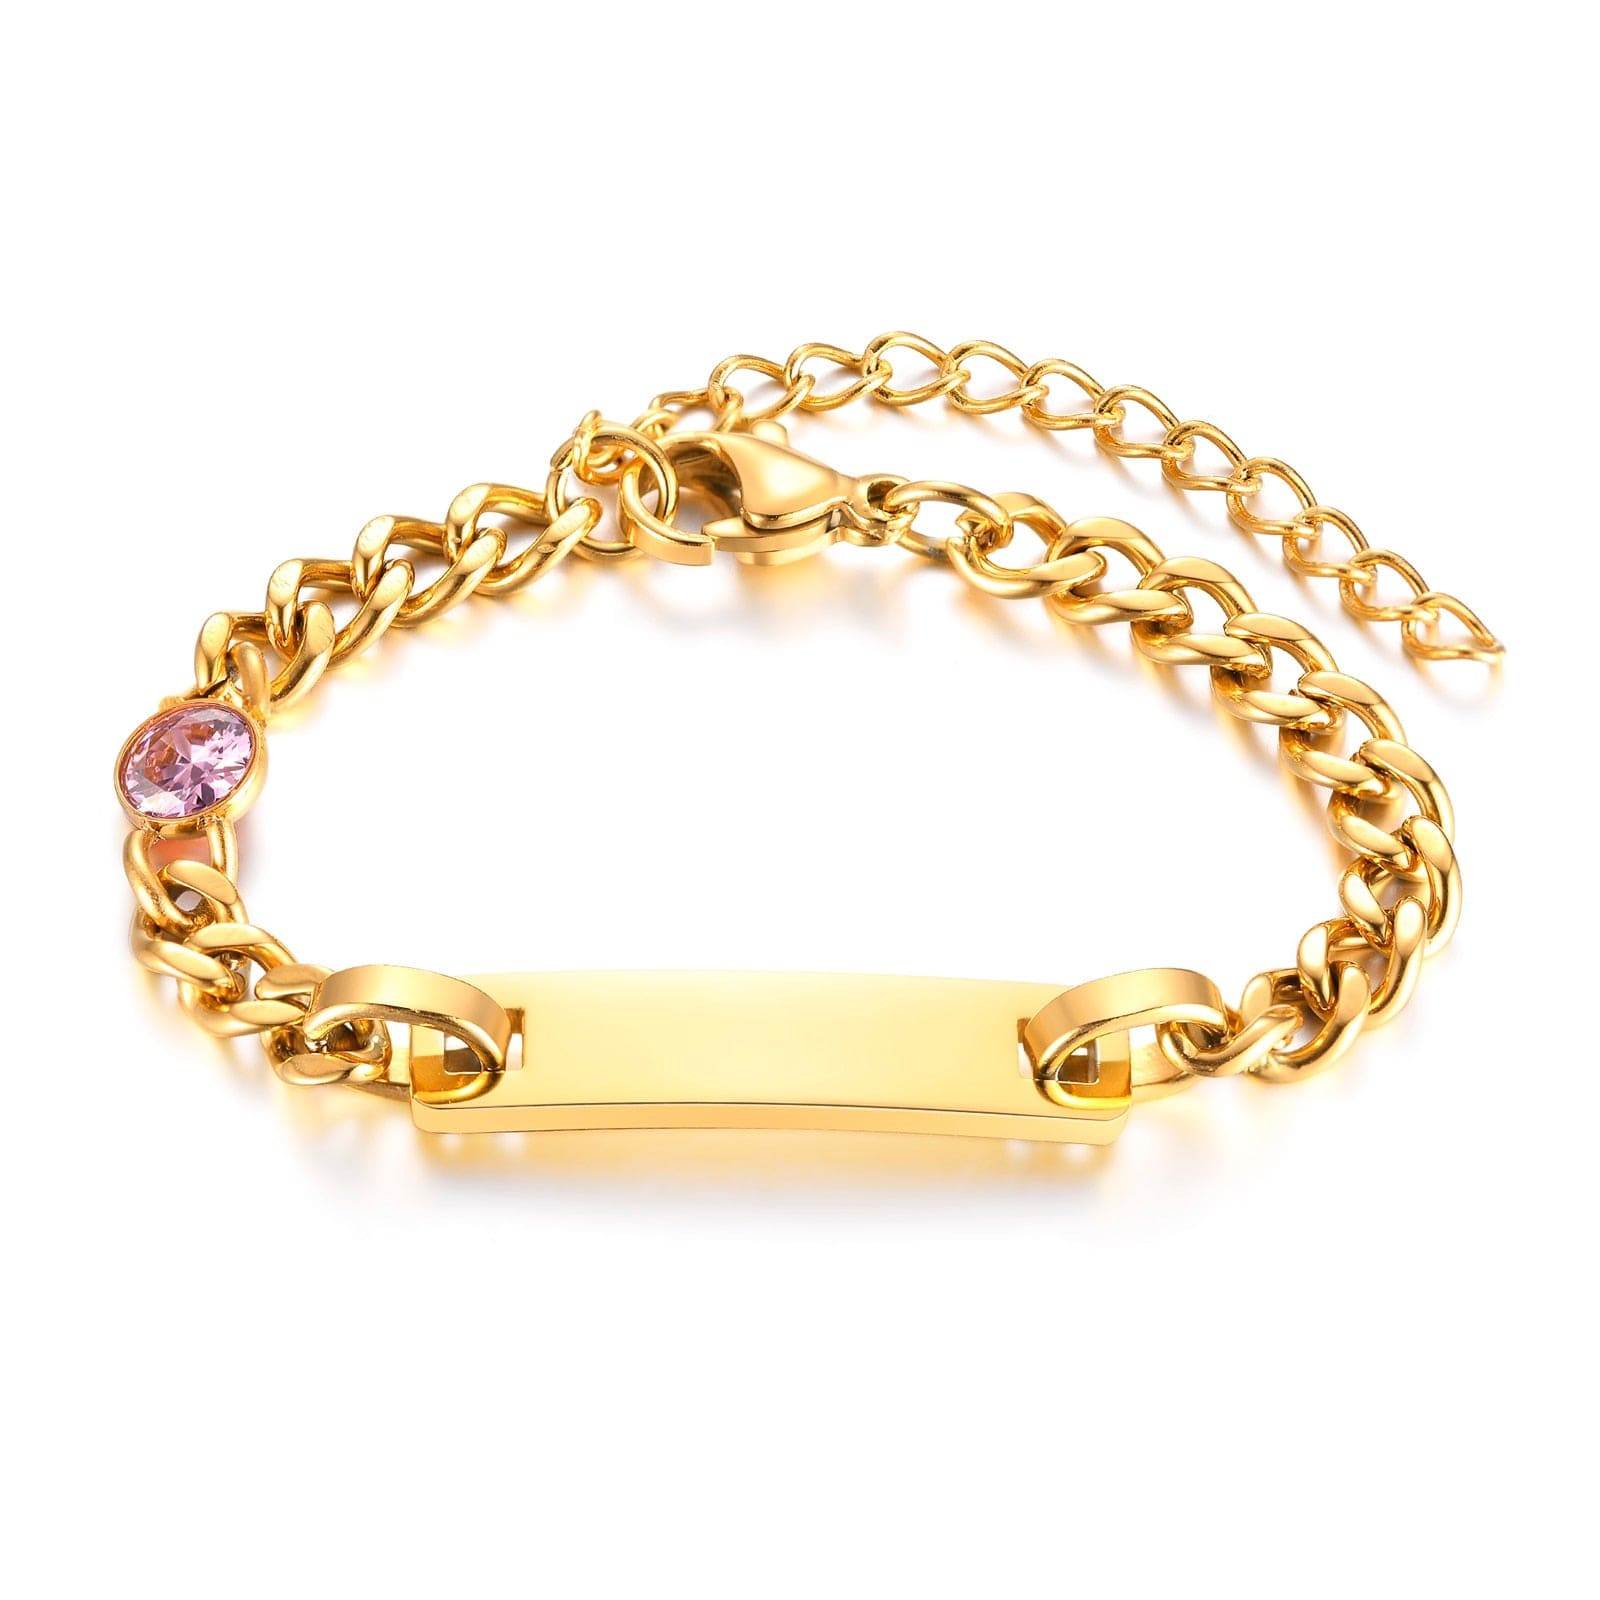 VVS Jewelry hip hop jewelry style 10 Custom Baby Engraved Name Bracelet with Birthstone